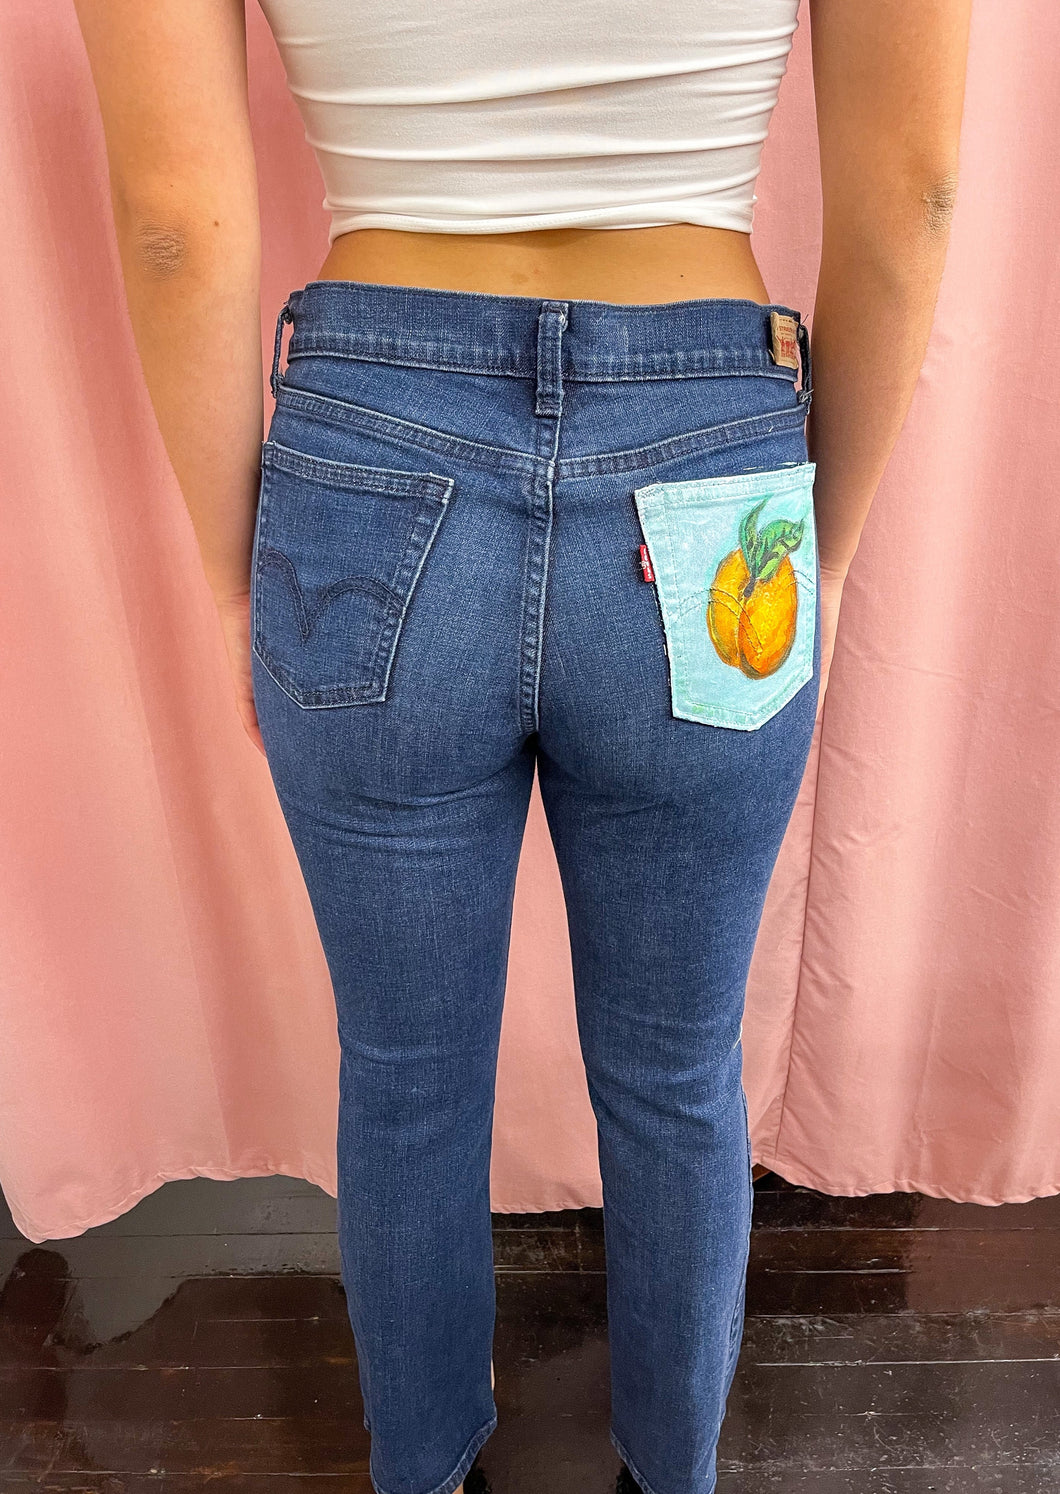 Isabelle Renee Art x GB- Blue Peach Jeans